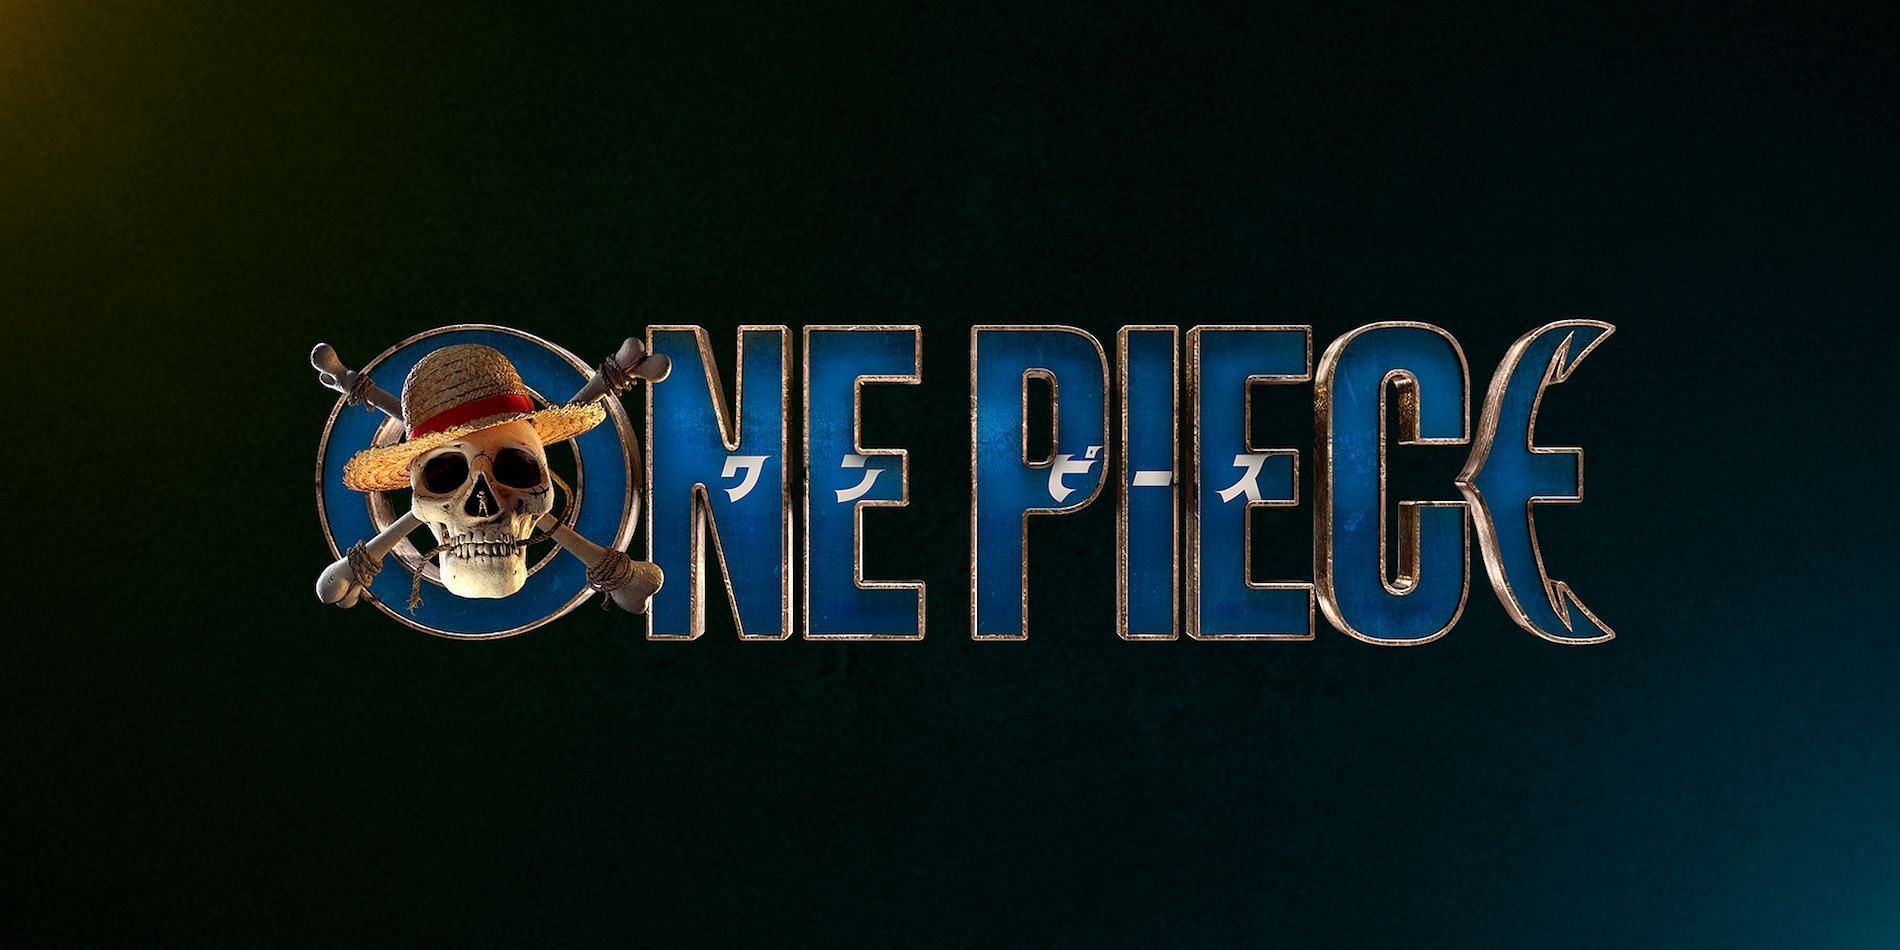 The One Piece live-action title card (Image via Netflix)